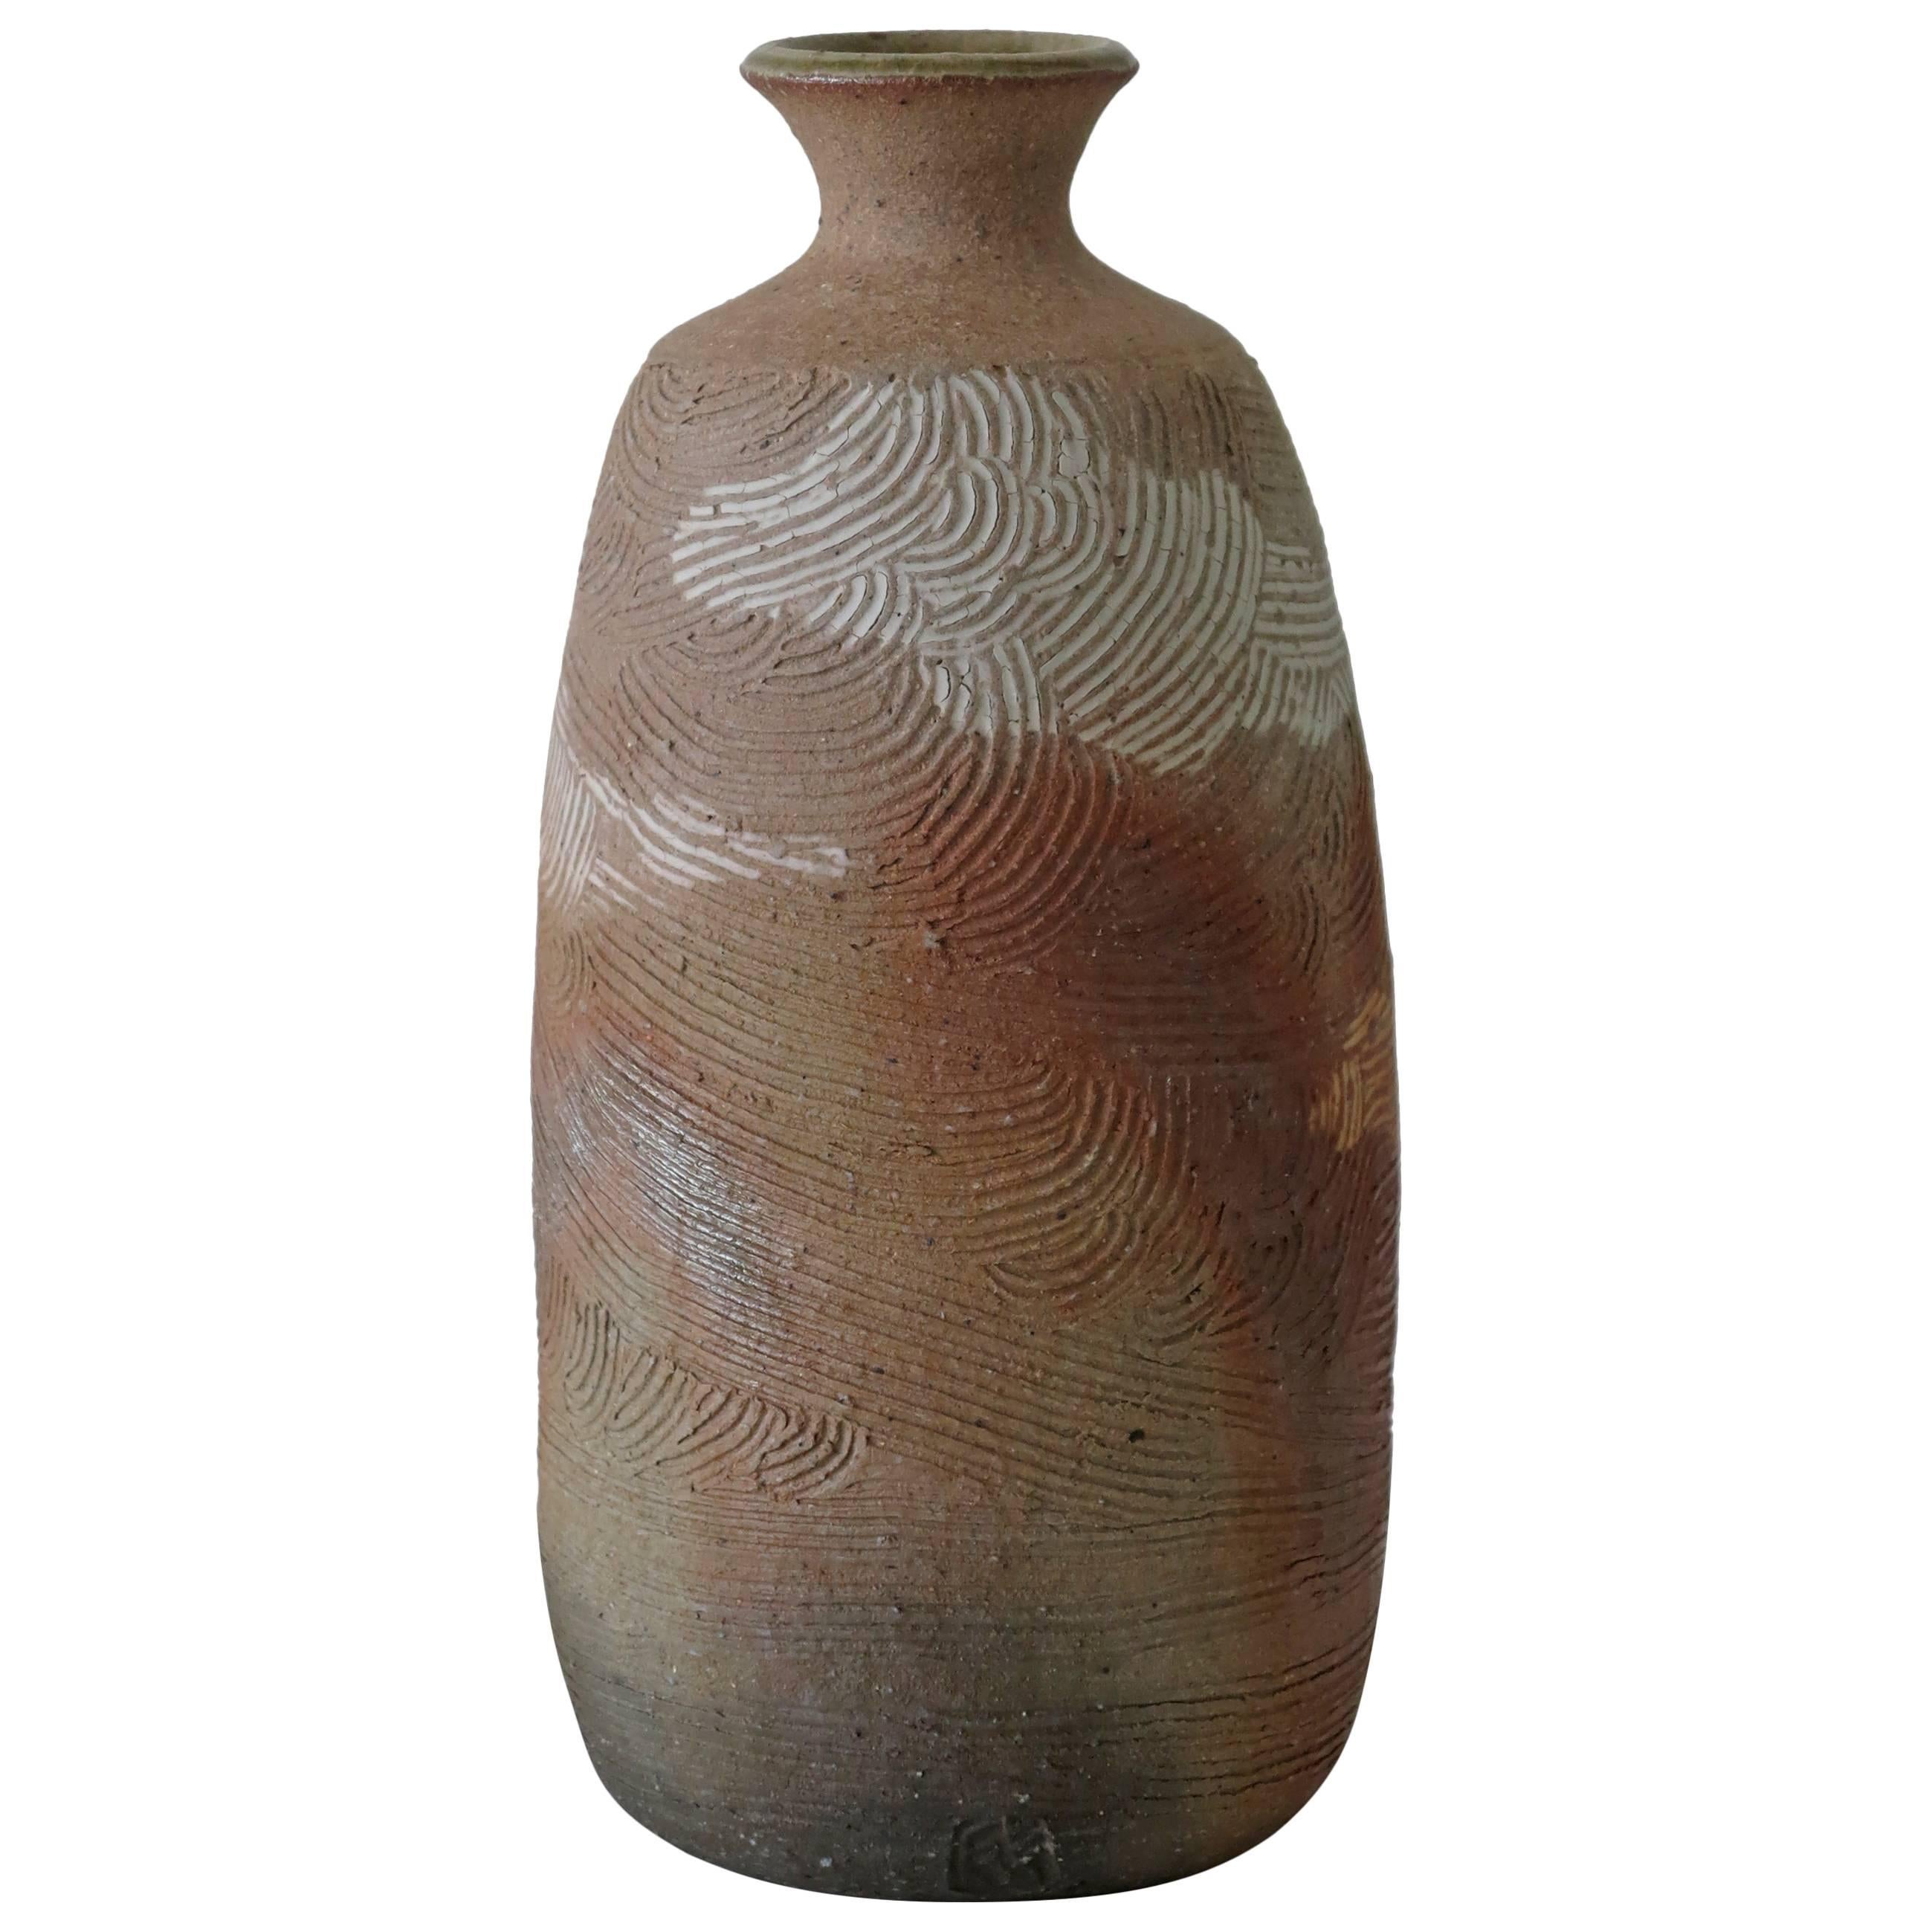 Japanese Incised Art Pottery Vase, Chop Mark